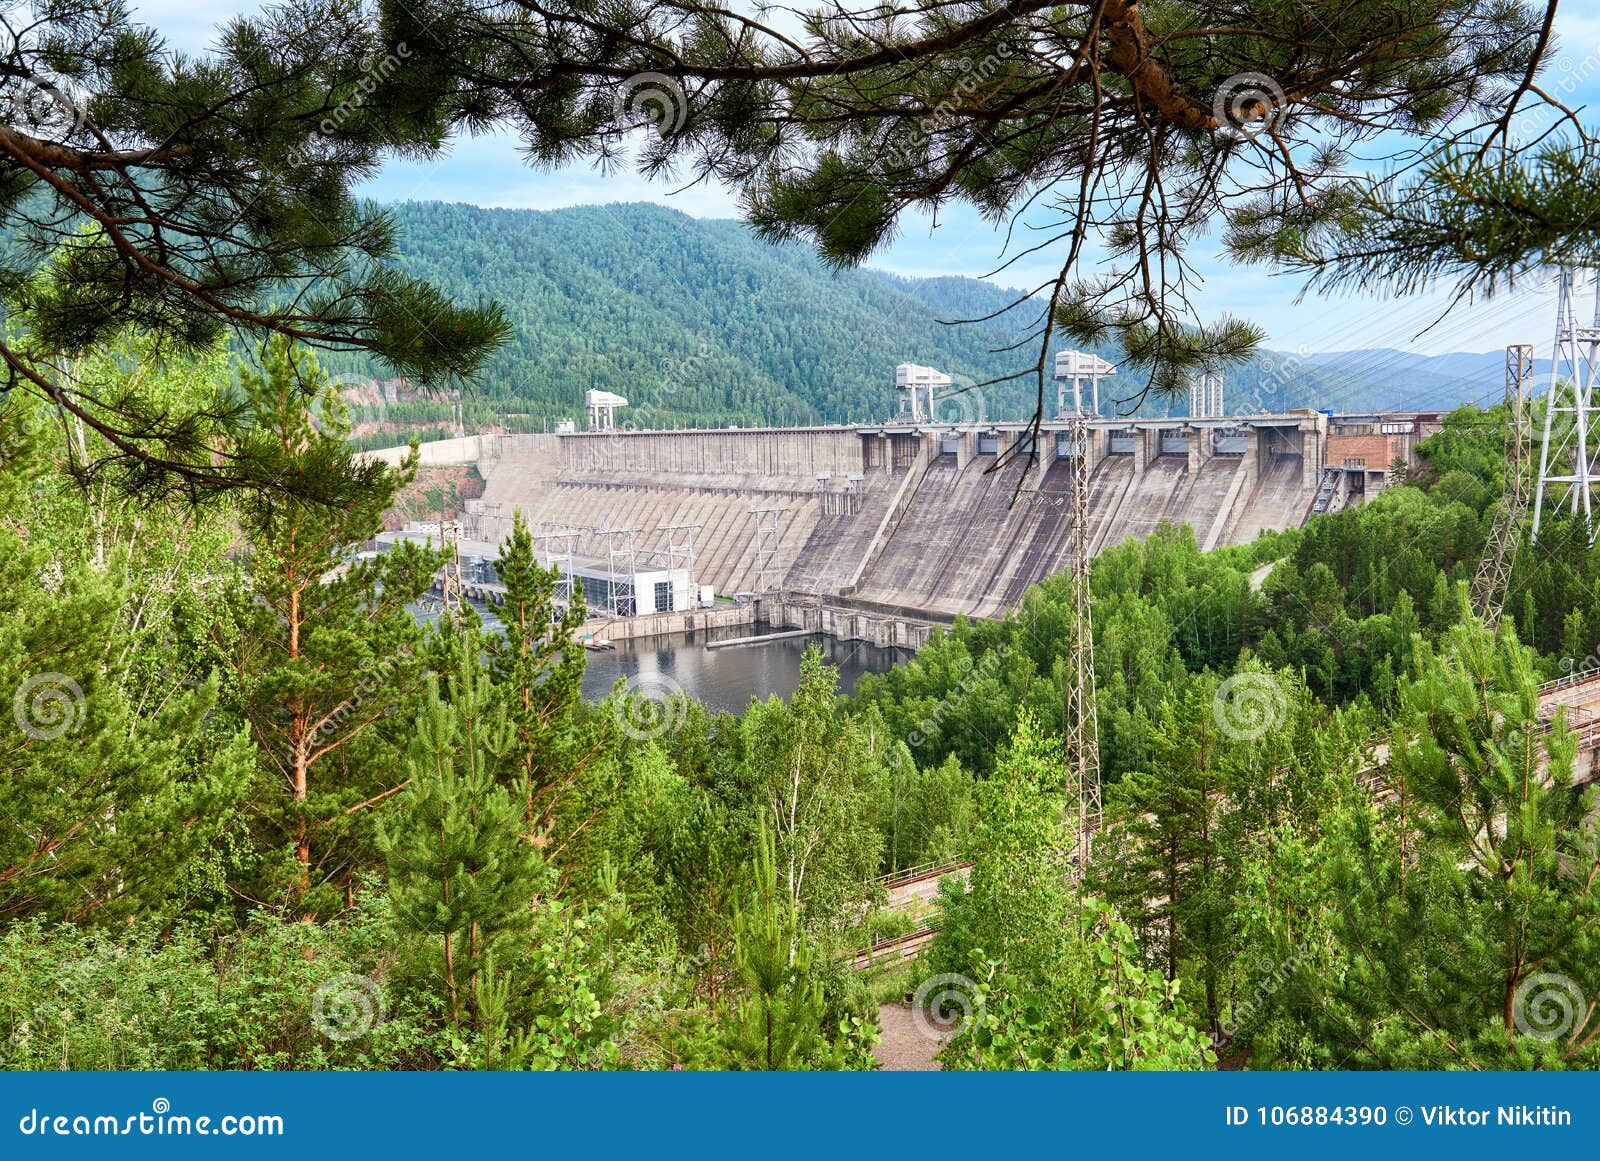 krasnoyarsk dam is powerful siberian hydroelectric power